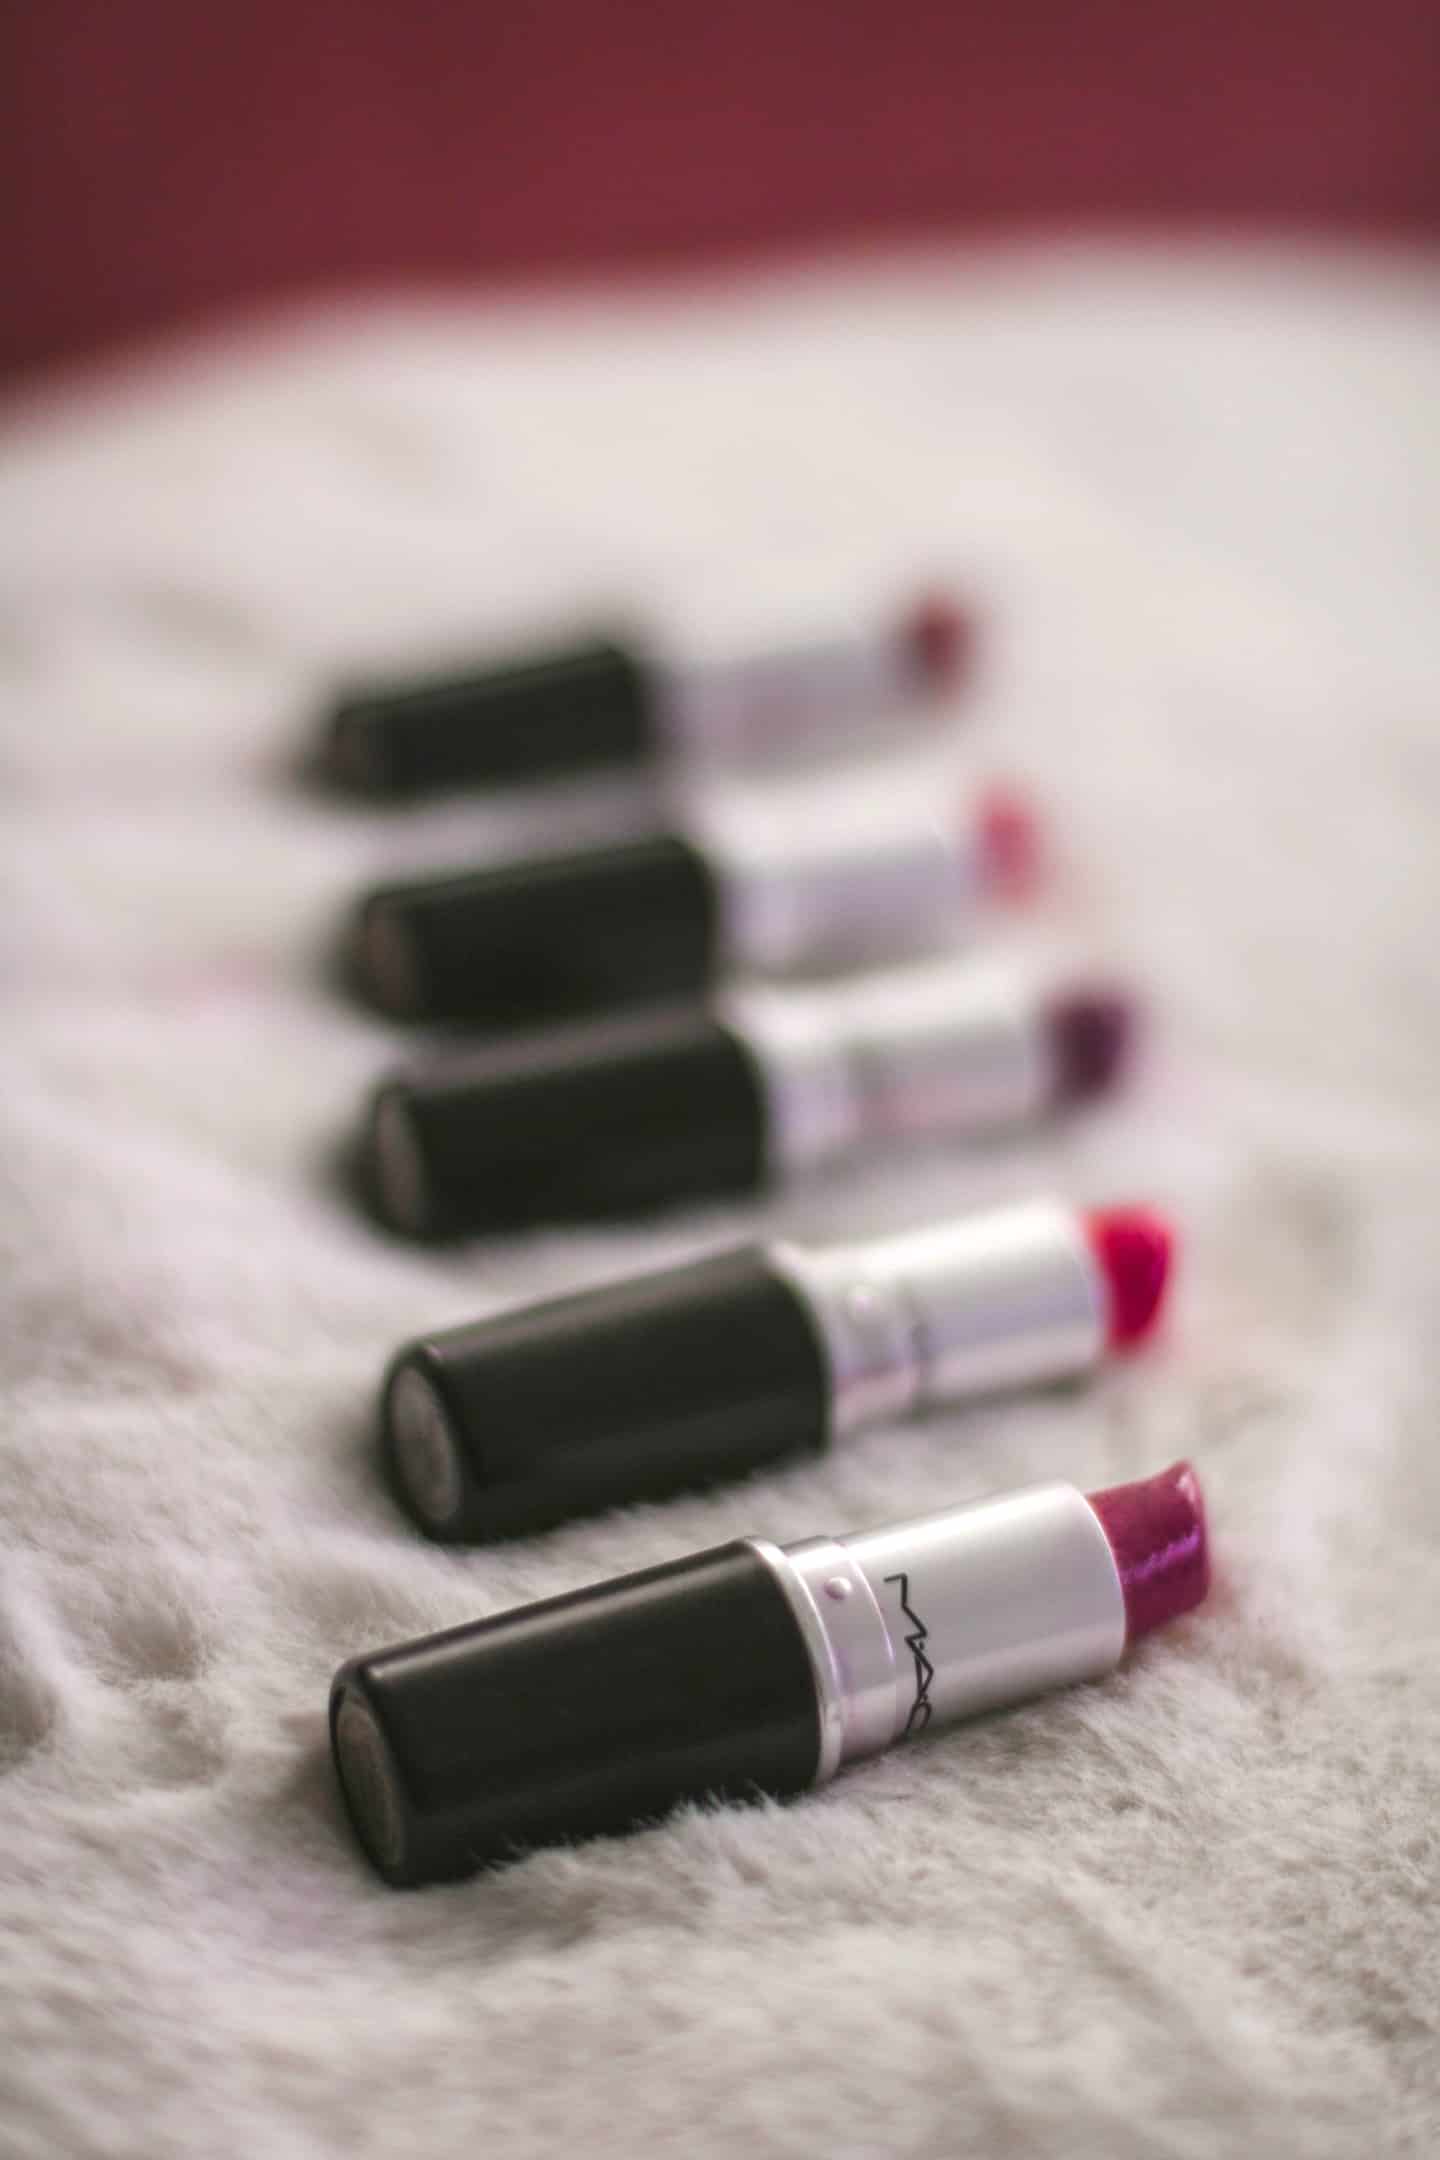 Top 5 MAC Lipsticks for Spring & Summer